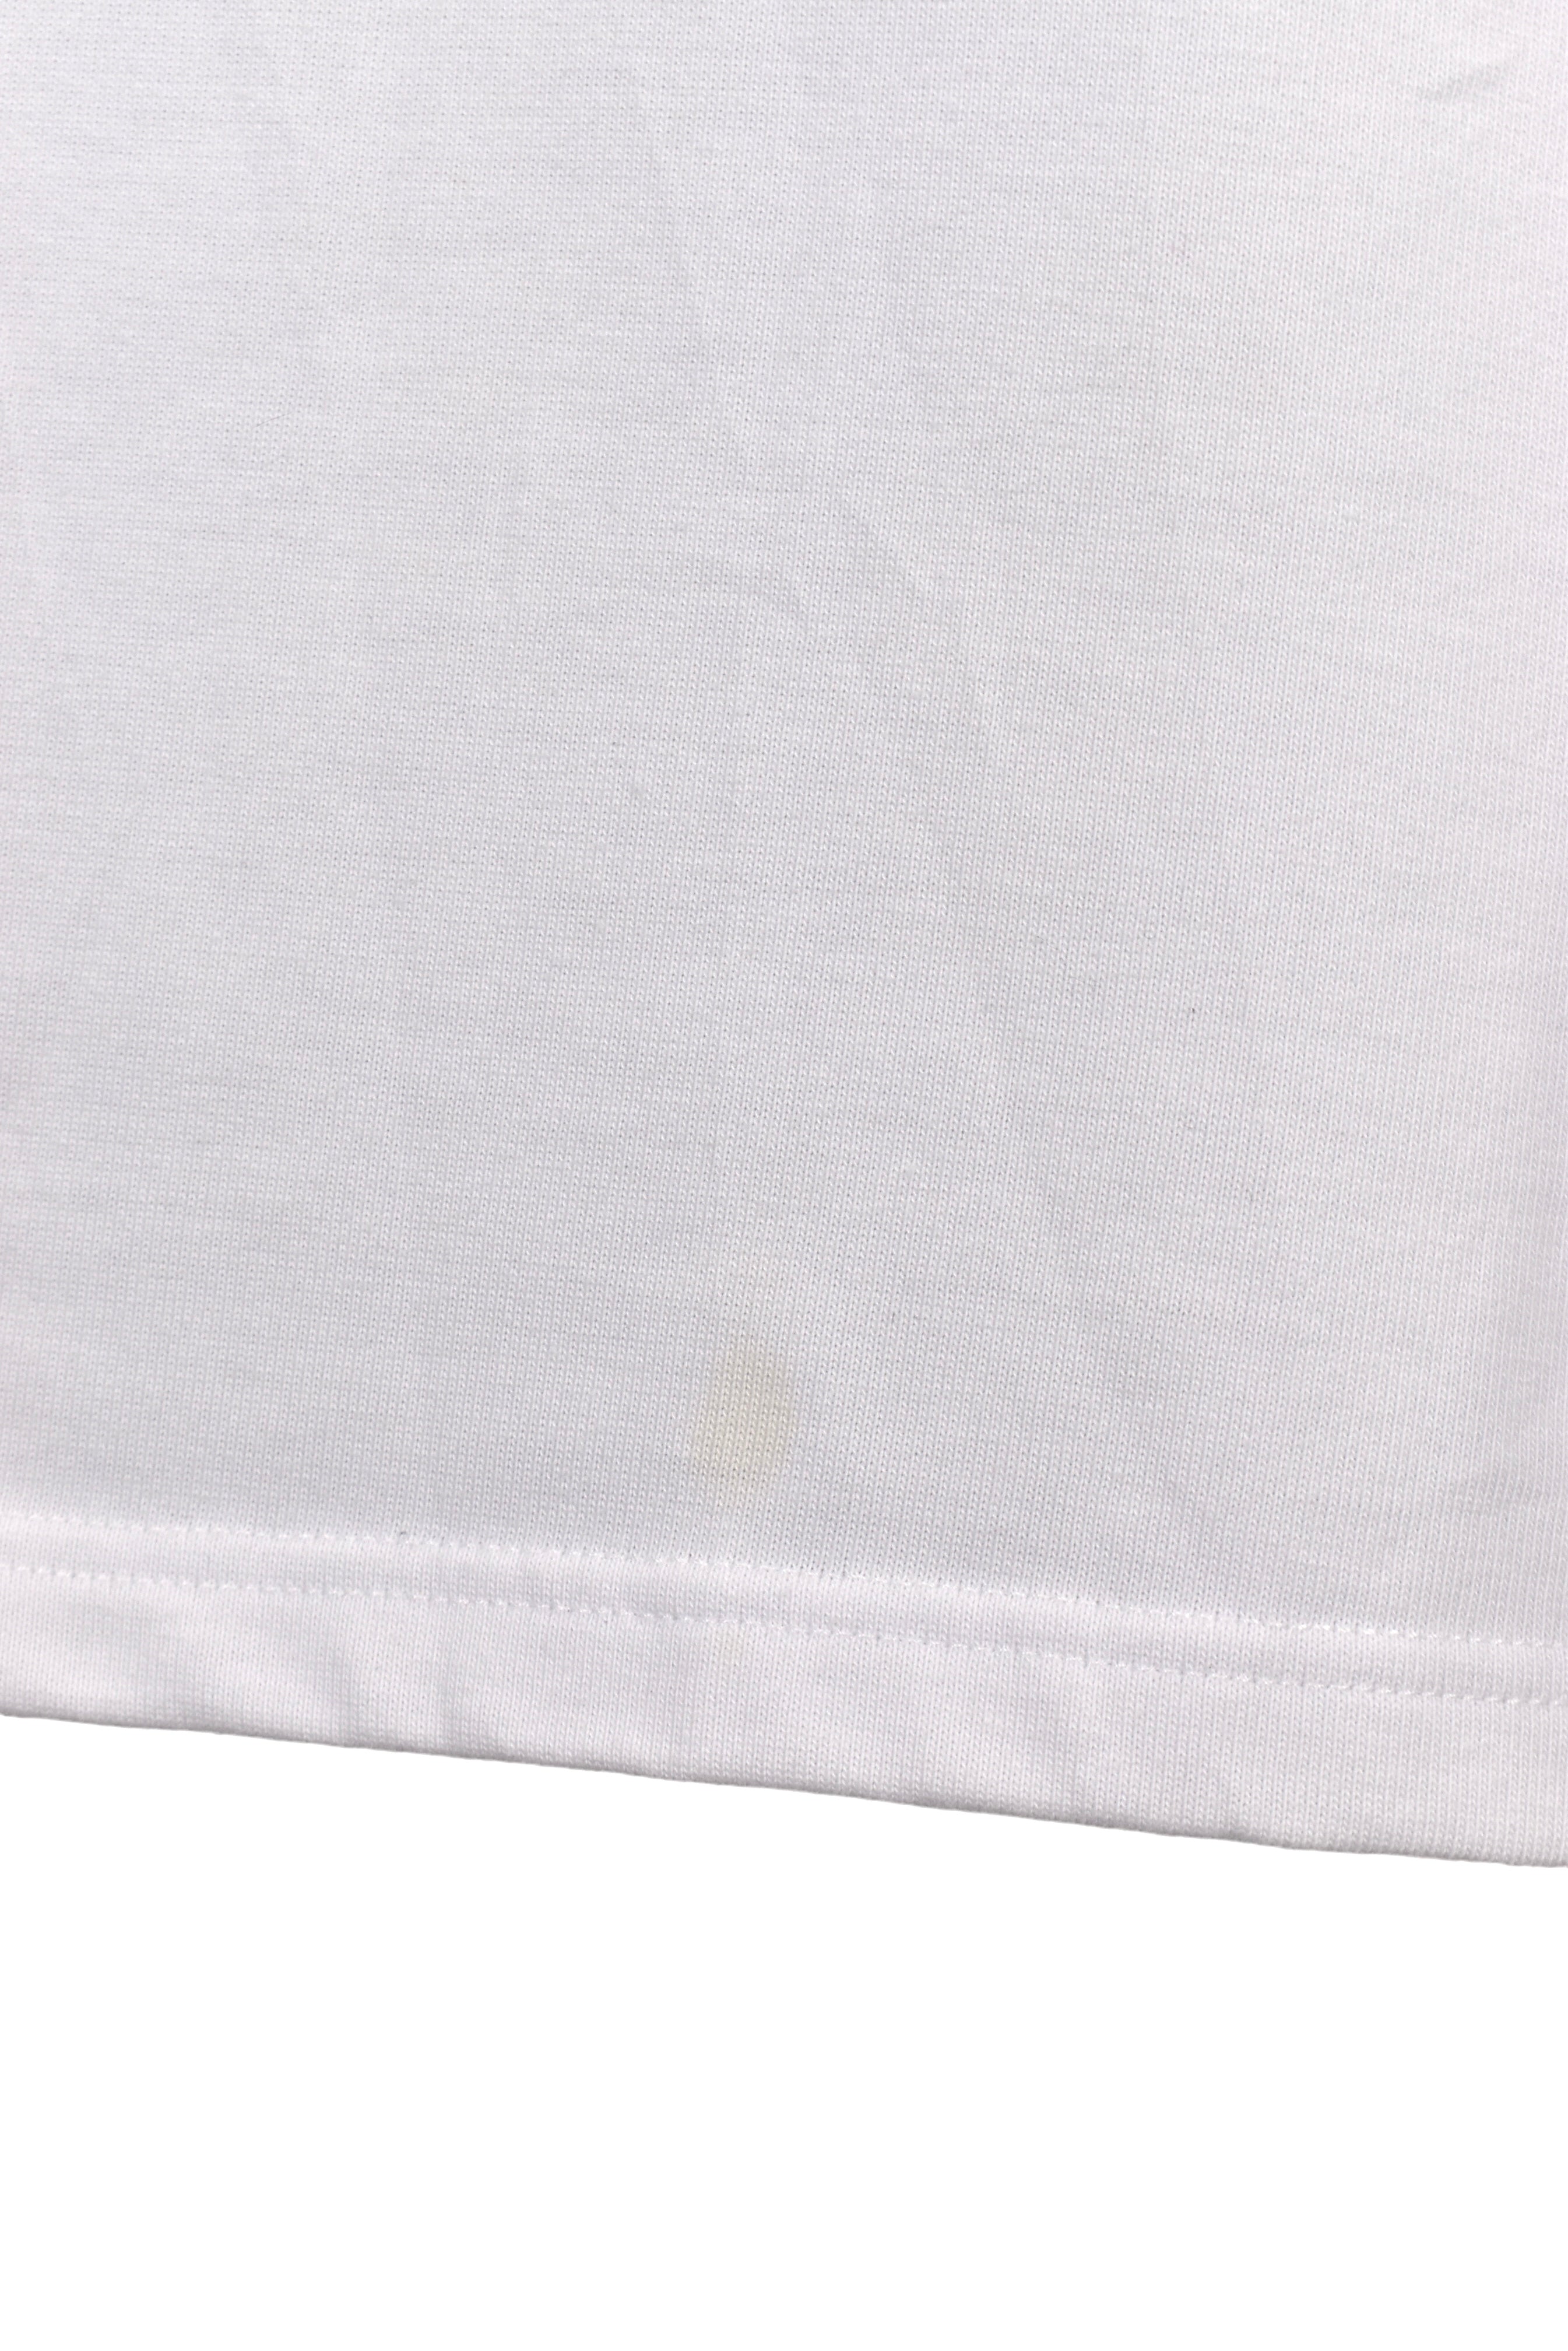 Vintage Minnesota Vikings sweatshirt (L), white NFL embroidered v-neck